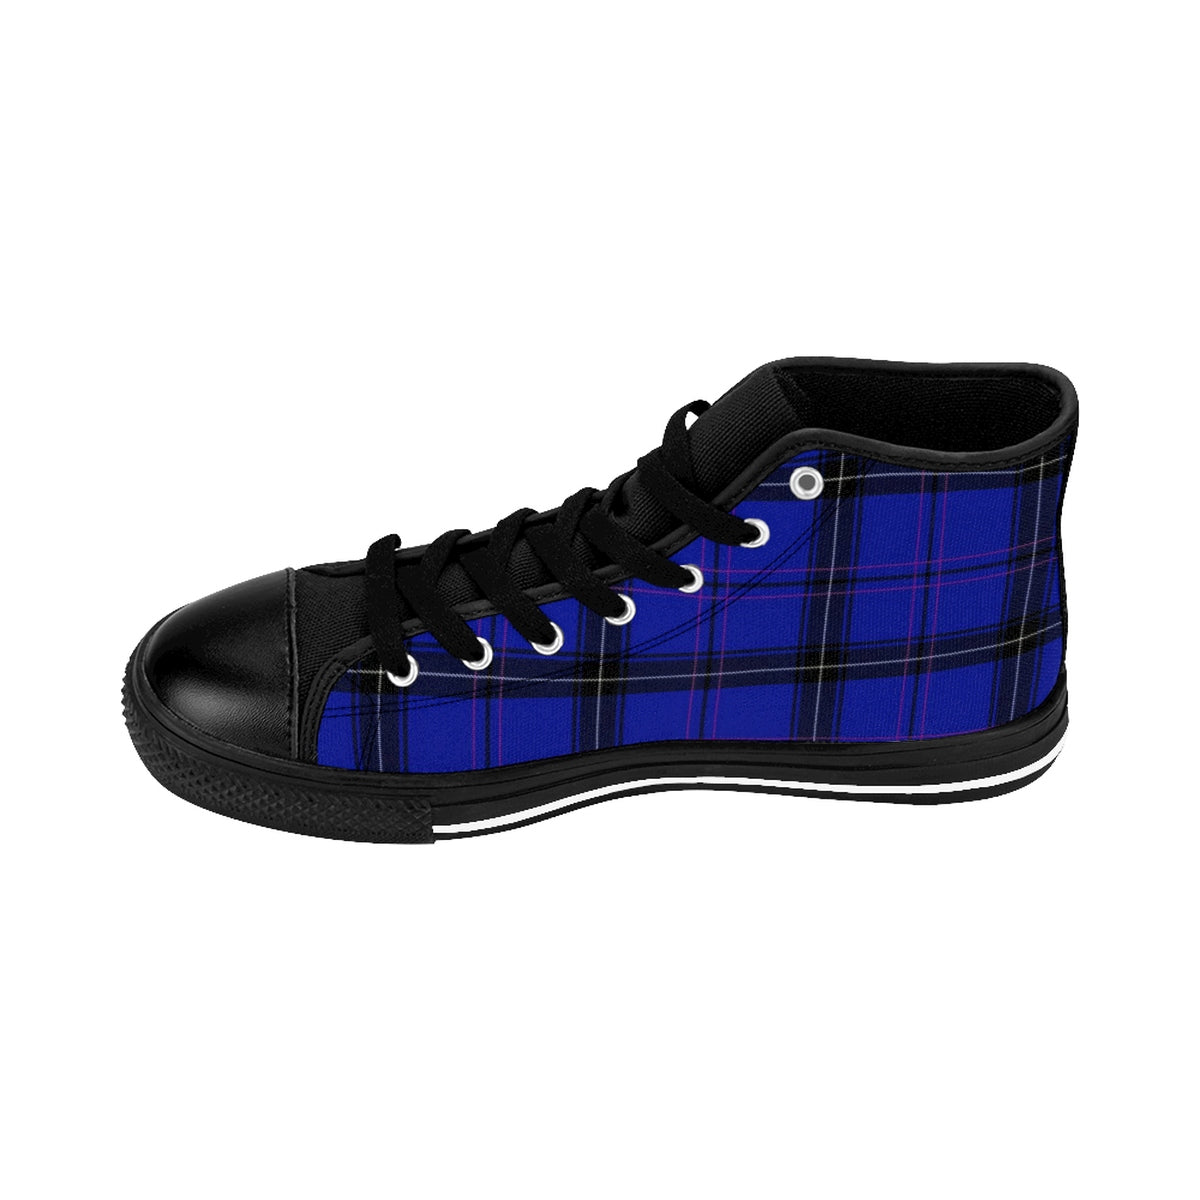 Blue Tartan Scottish Plaid Printed Premium Men's High-top Fashion Sneakers Shoes-Men's High Top Sneakers-Black-US 9-Heidi Kimura Art LLC